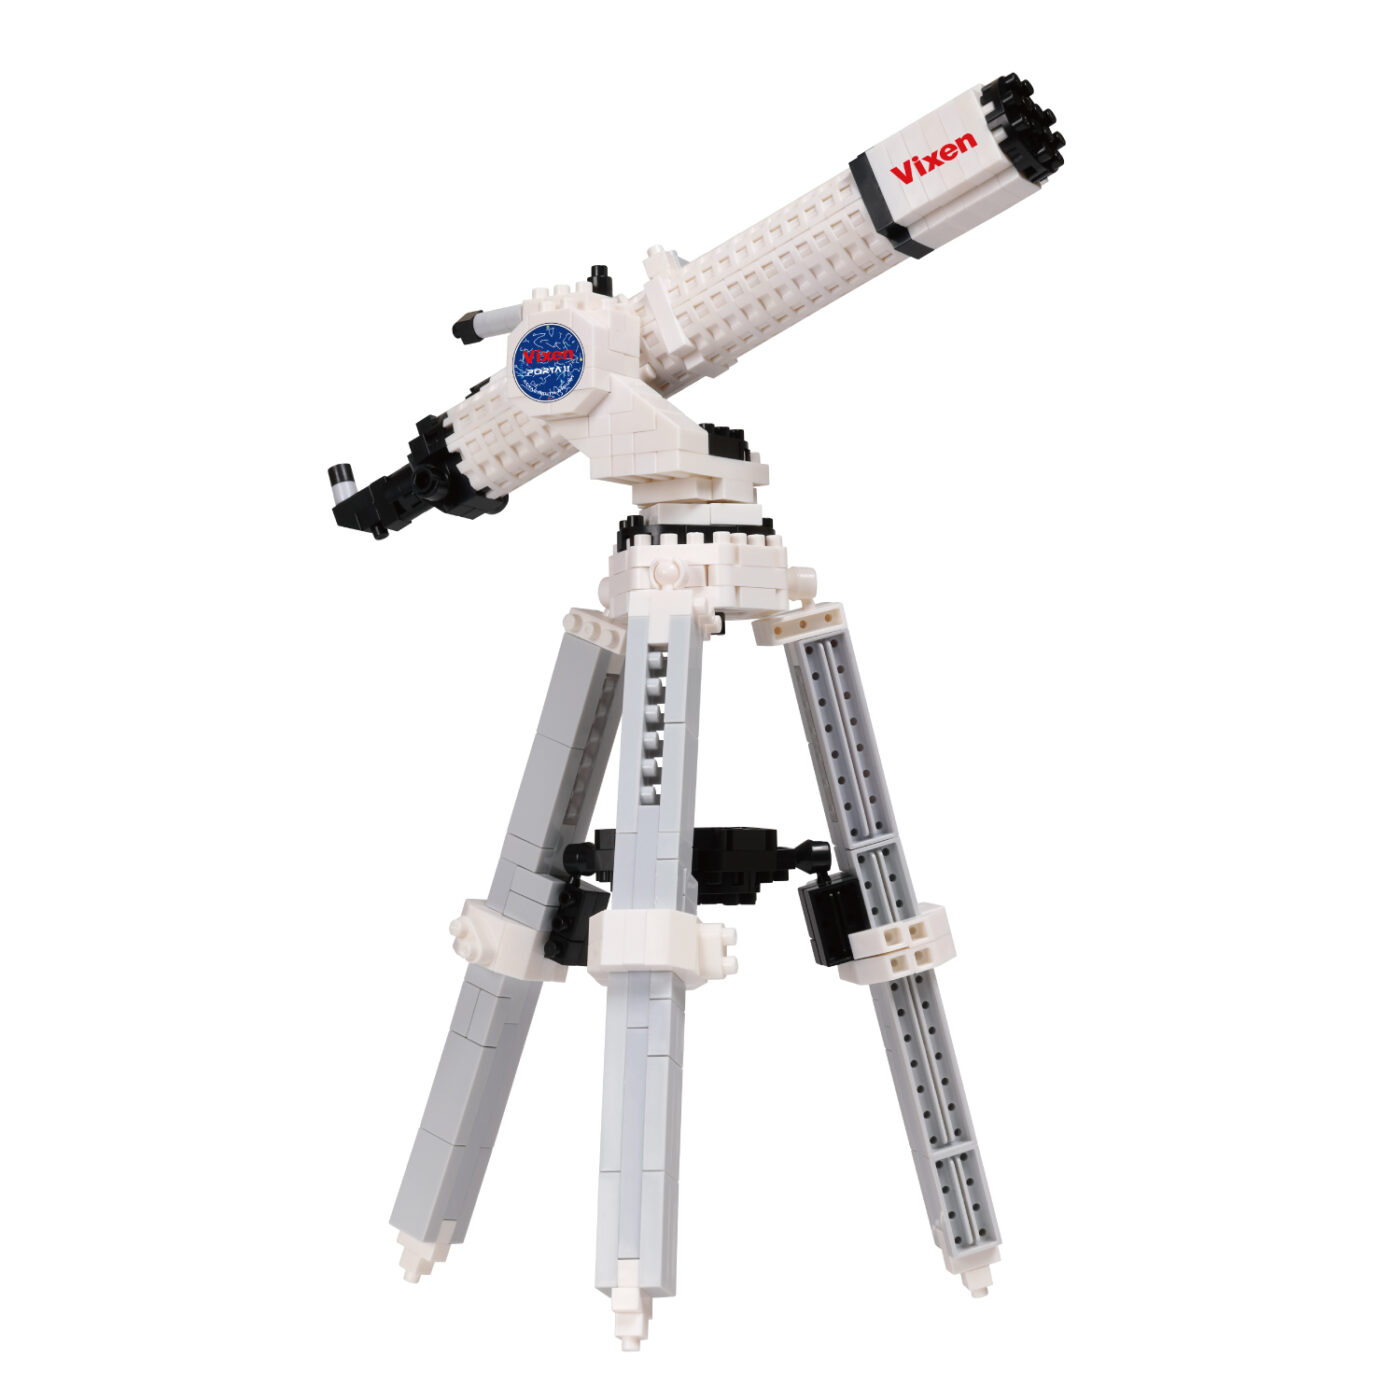 【専用バッグ付】望遠鏡 Vixen PORTA A80Mf